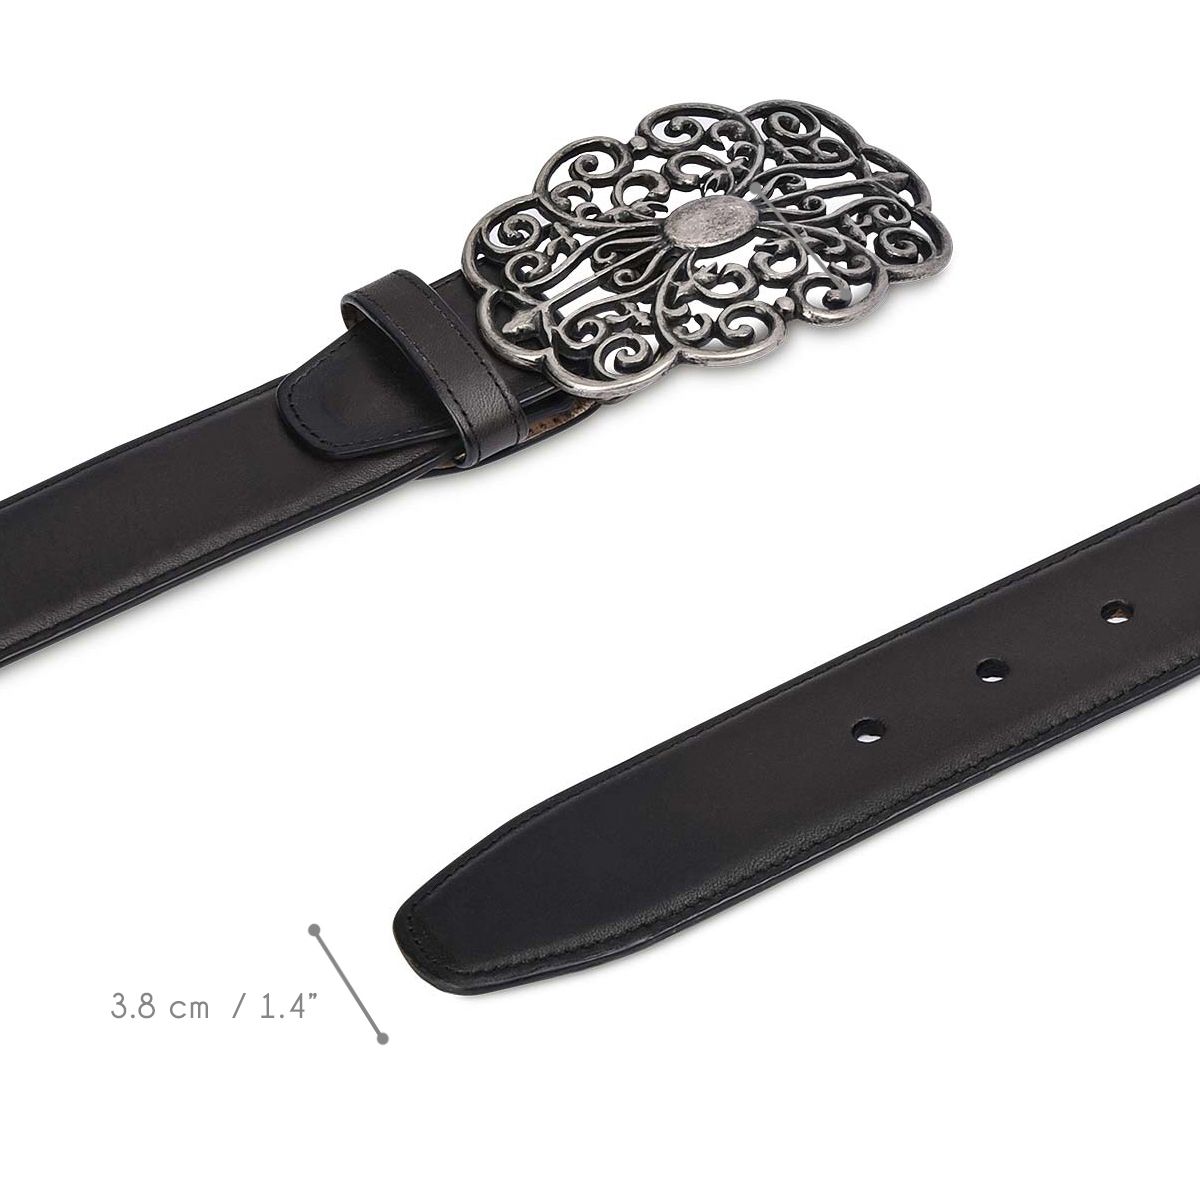 Engraved oxford leather belt